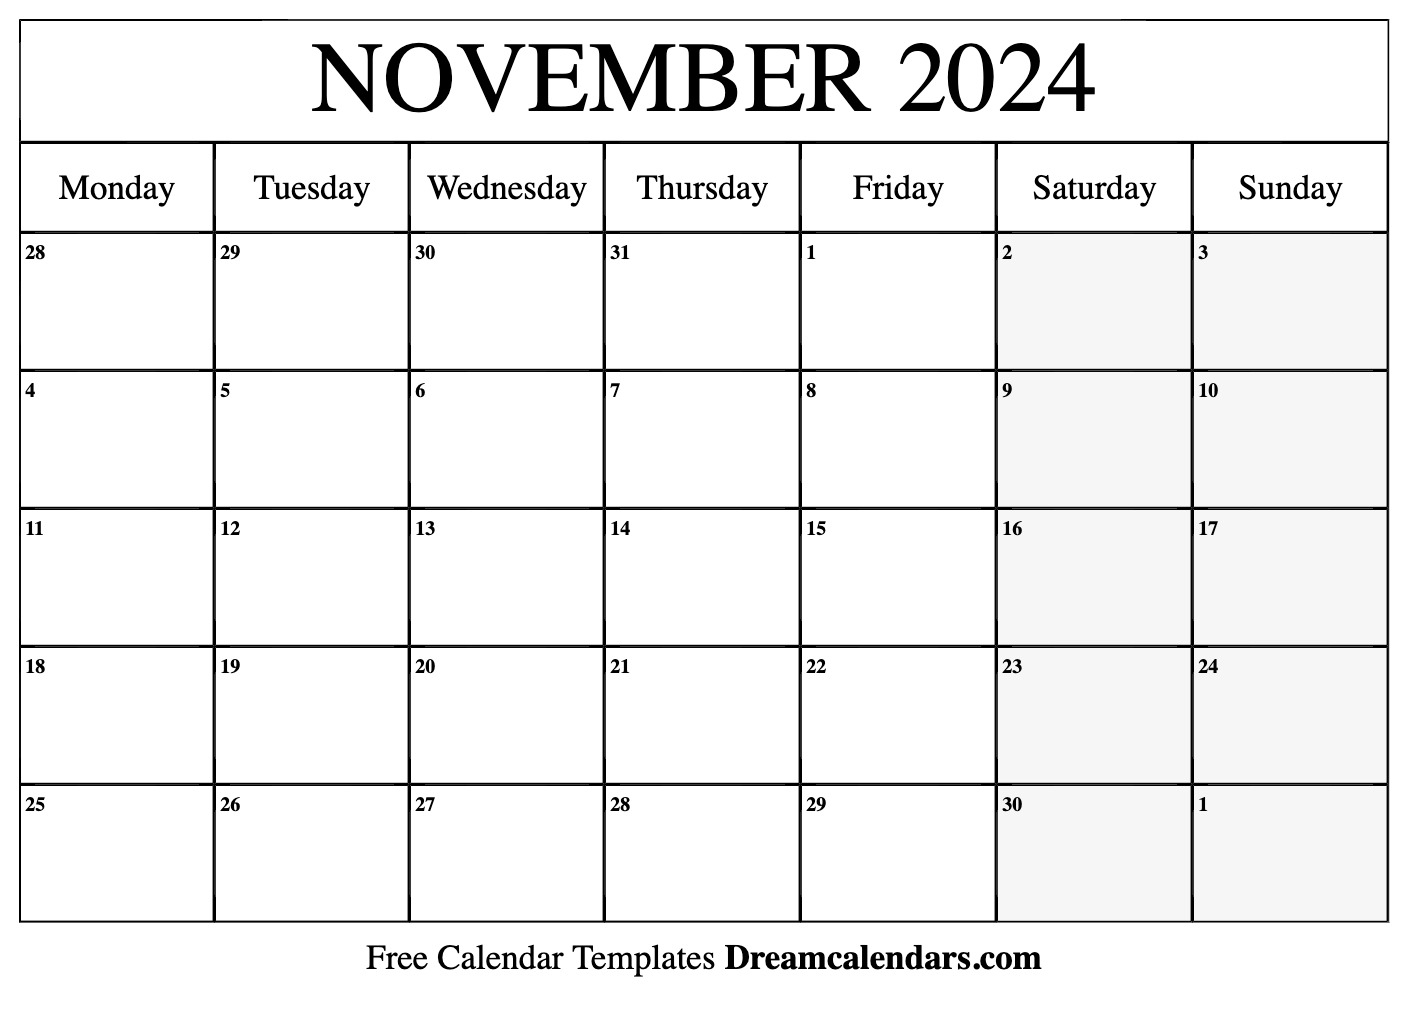 November 2024 Calendar | Free Blank Printable With Holidays for November 2024 Calendar Printable Free